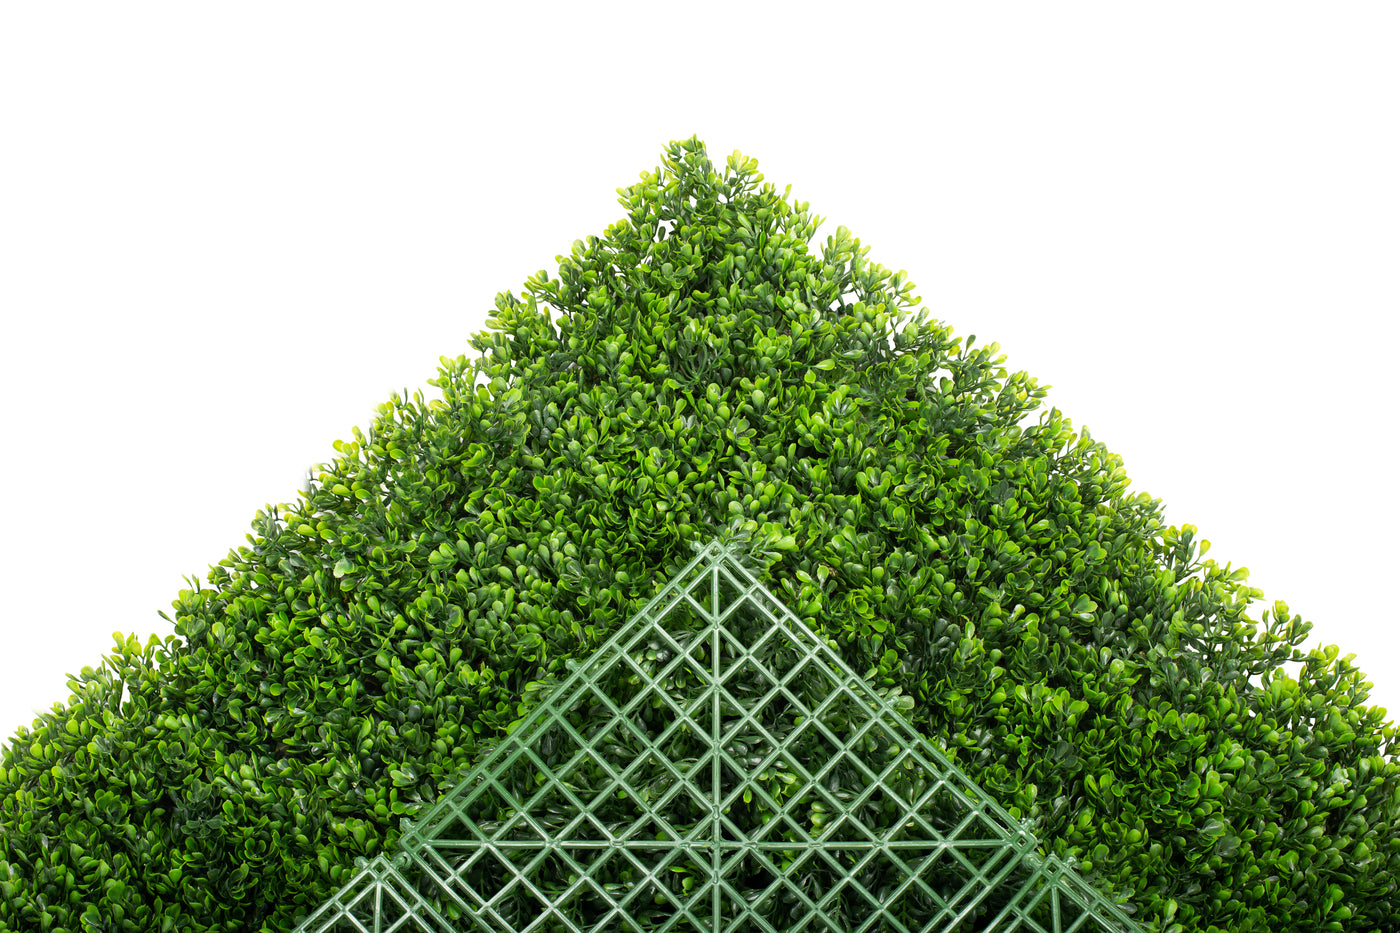 Gradina verticala din plante artificiale 1mp (100x100cm) model V50 pentru interior si exterior